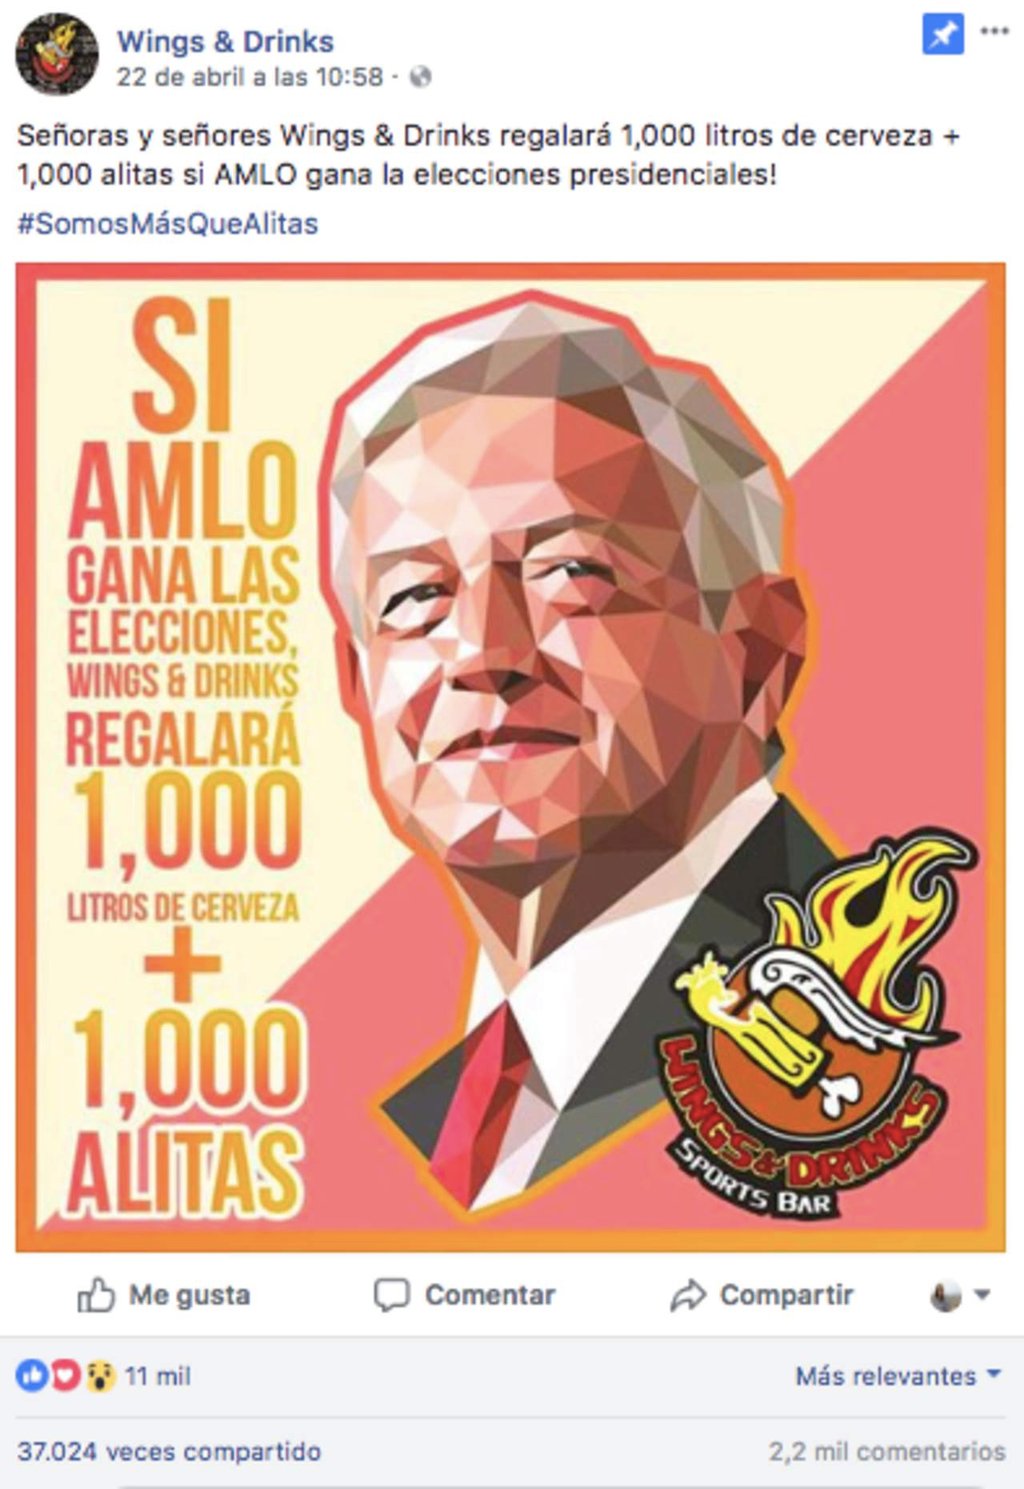 Varios locales ofrecen comida o servicios gratis si gana López Obrador, pero ¿es legal?